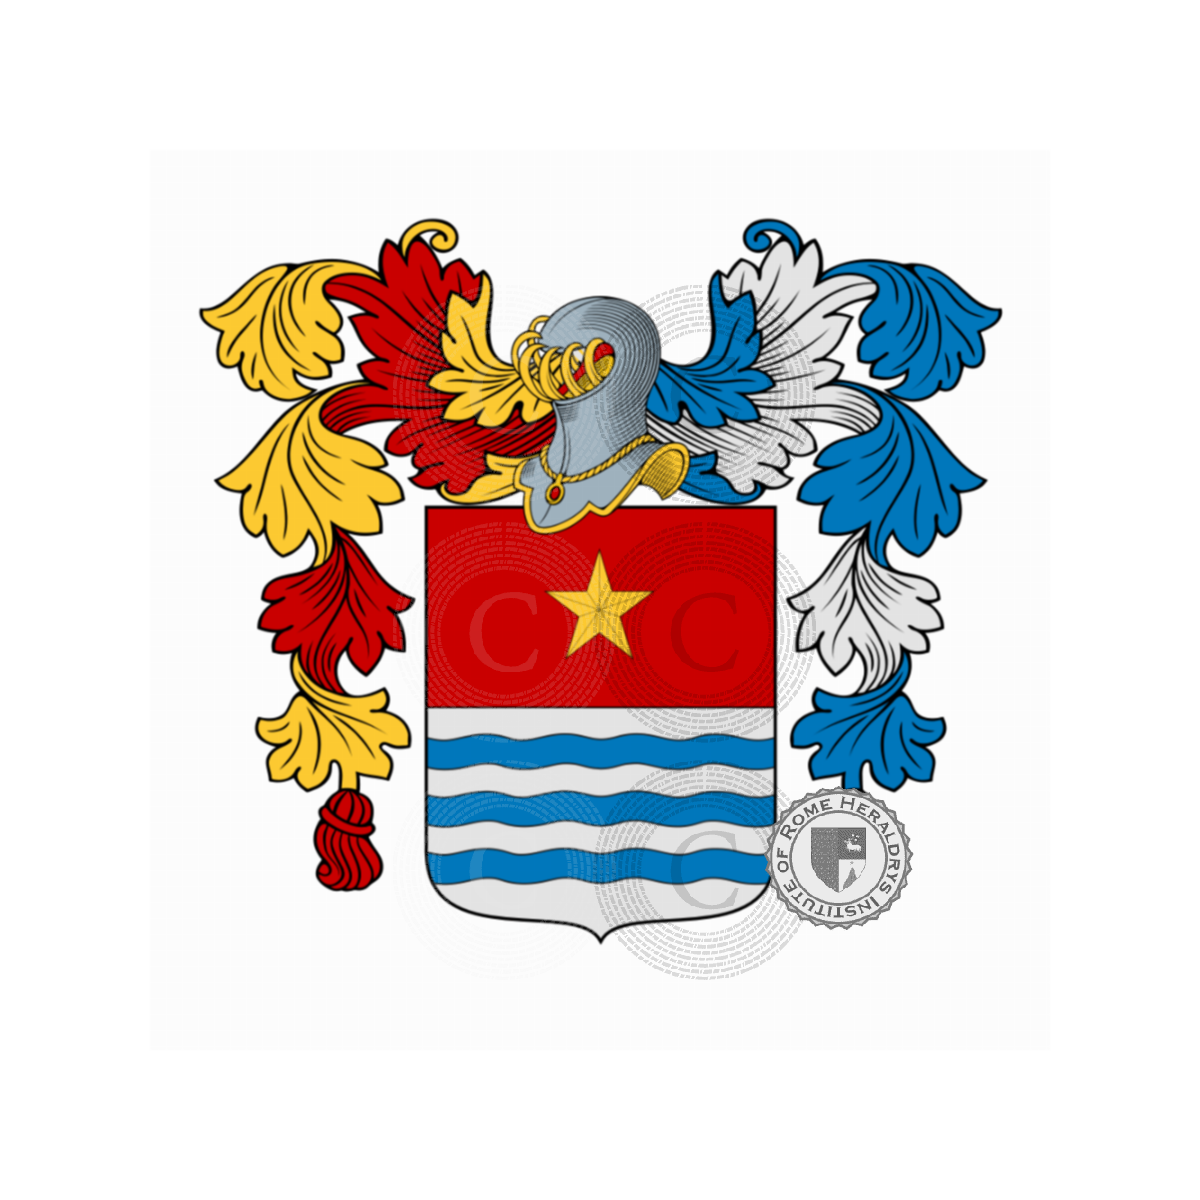 Coat of arms of familyGiordano, de Giordani,Giordana,Giordano delle Lanze,Giordano Lanza,Iordanus,Longo